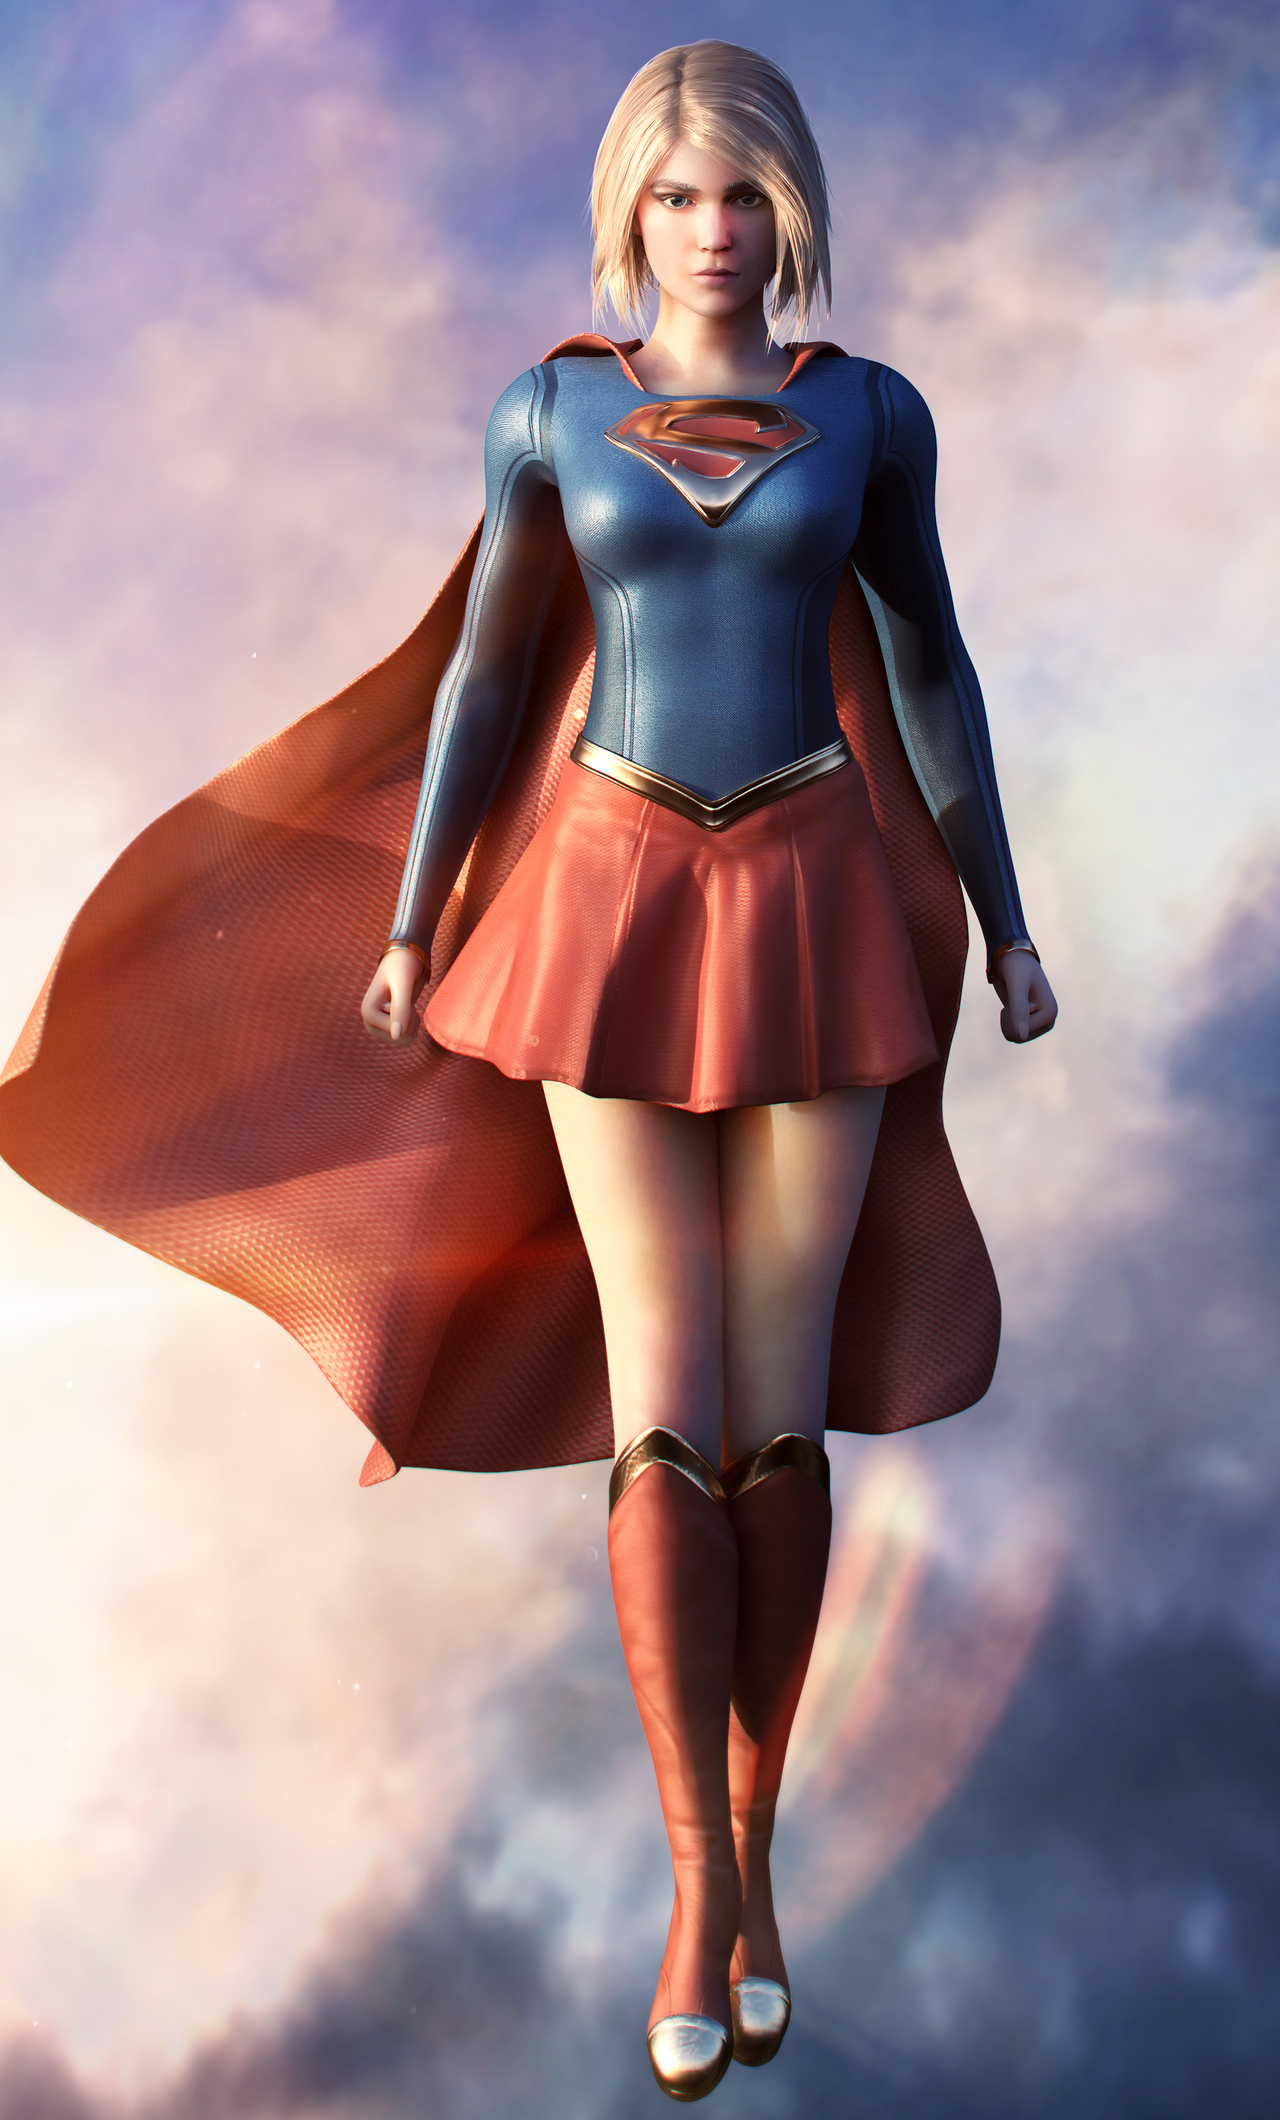 Supergirl Digital In 1280x2120 Resolution. supergirl-digital-4y.jpg. 